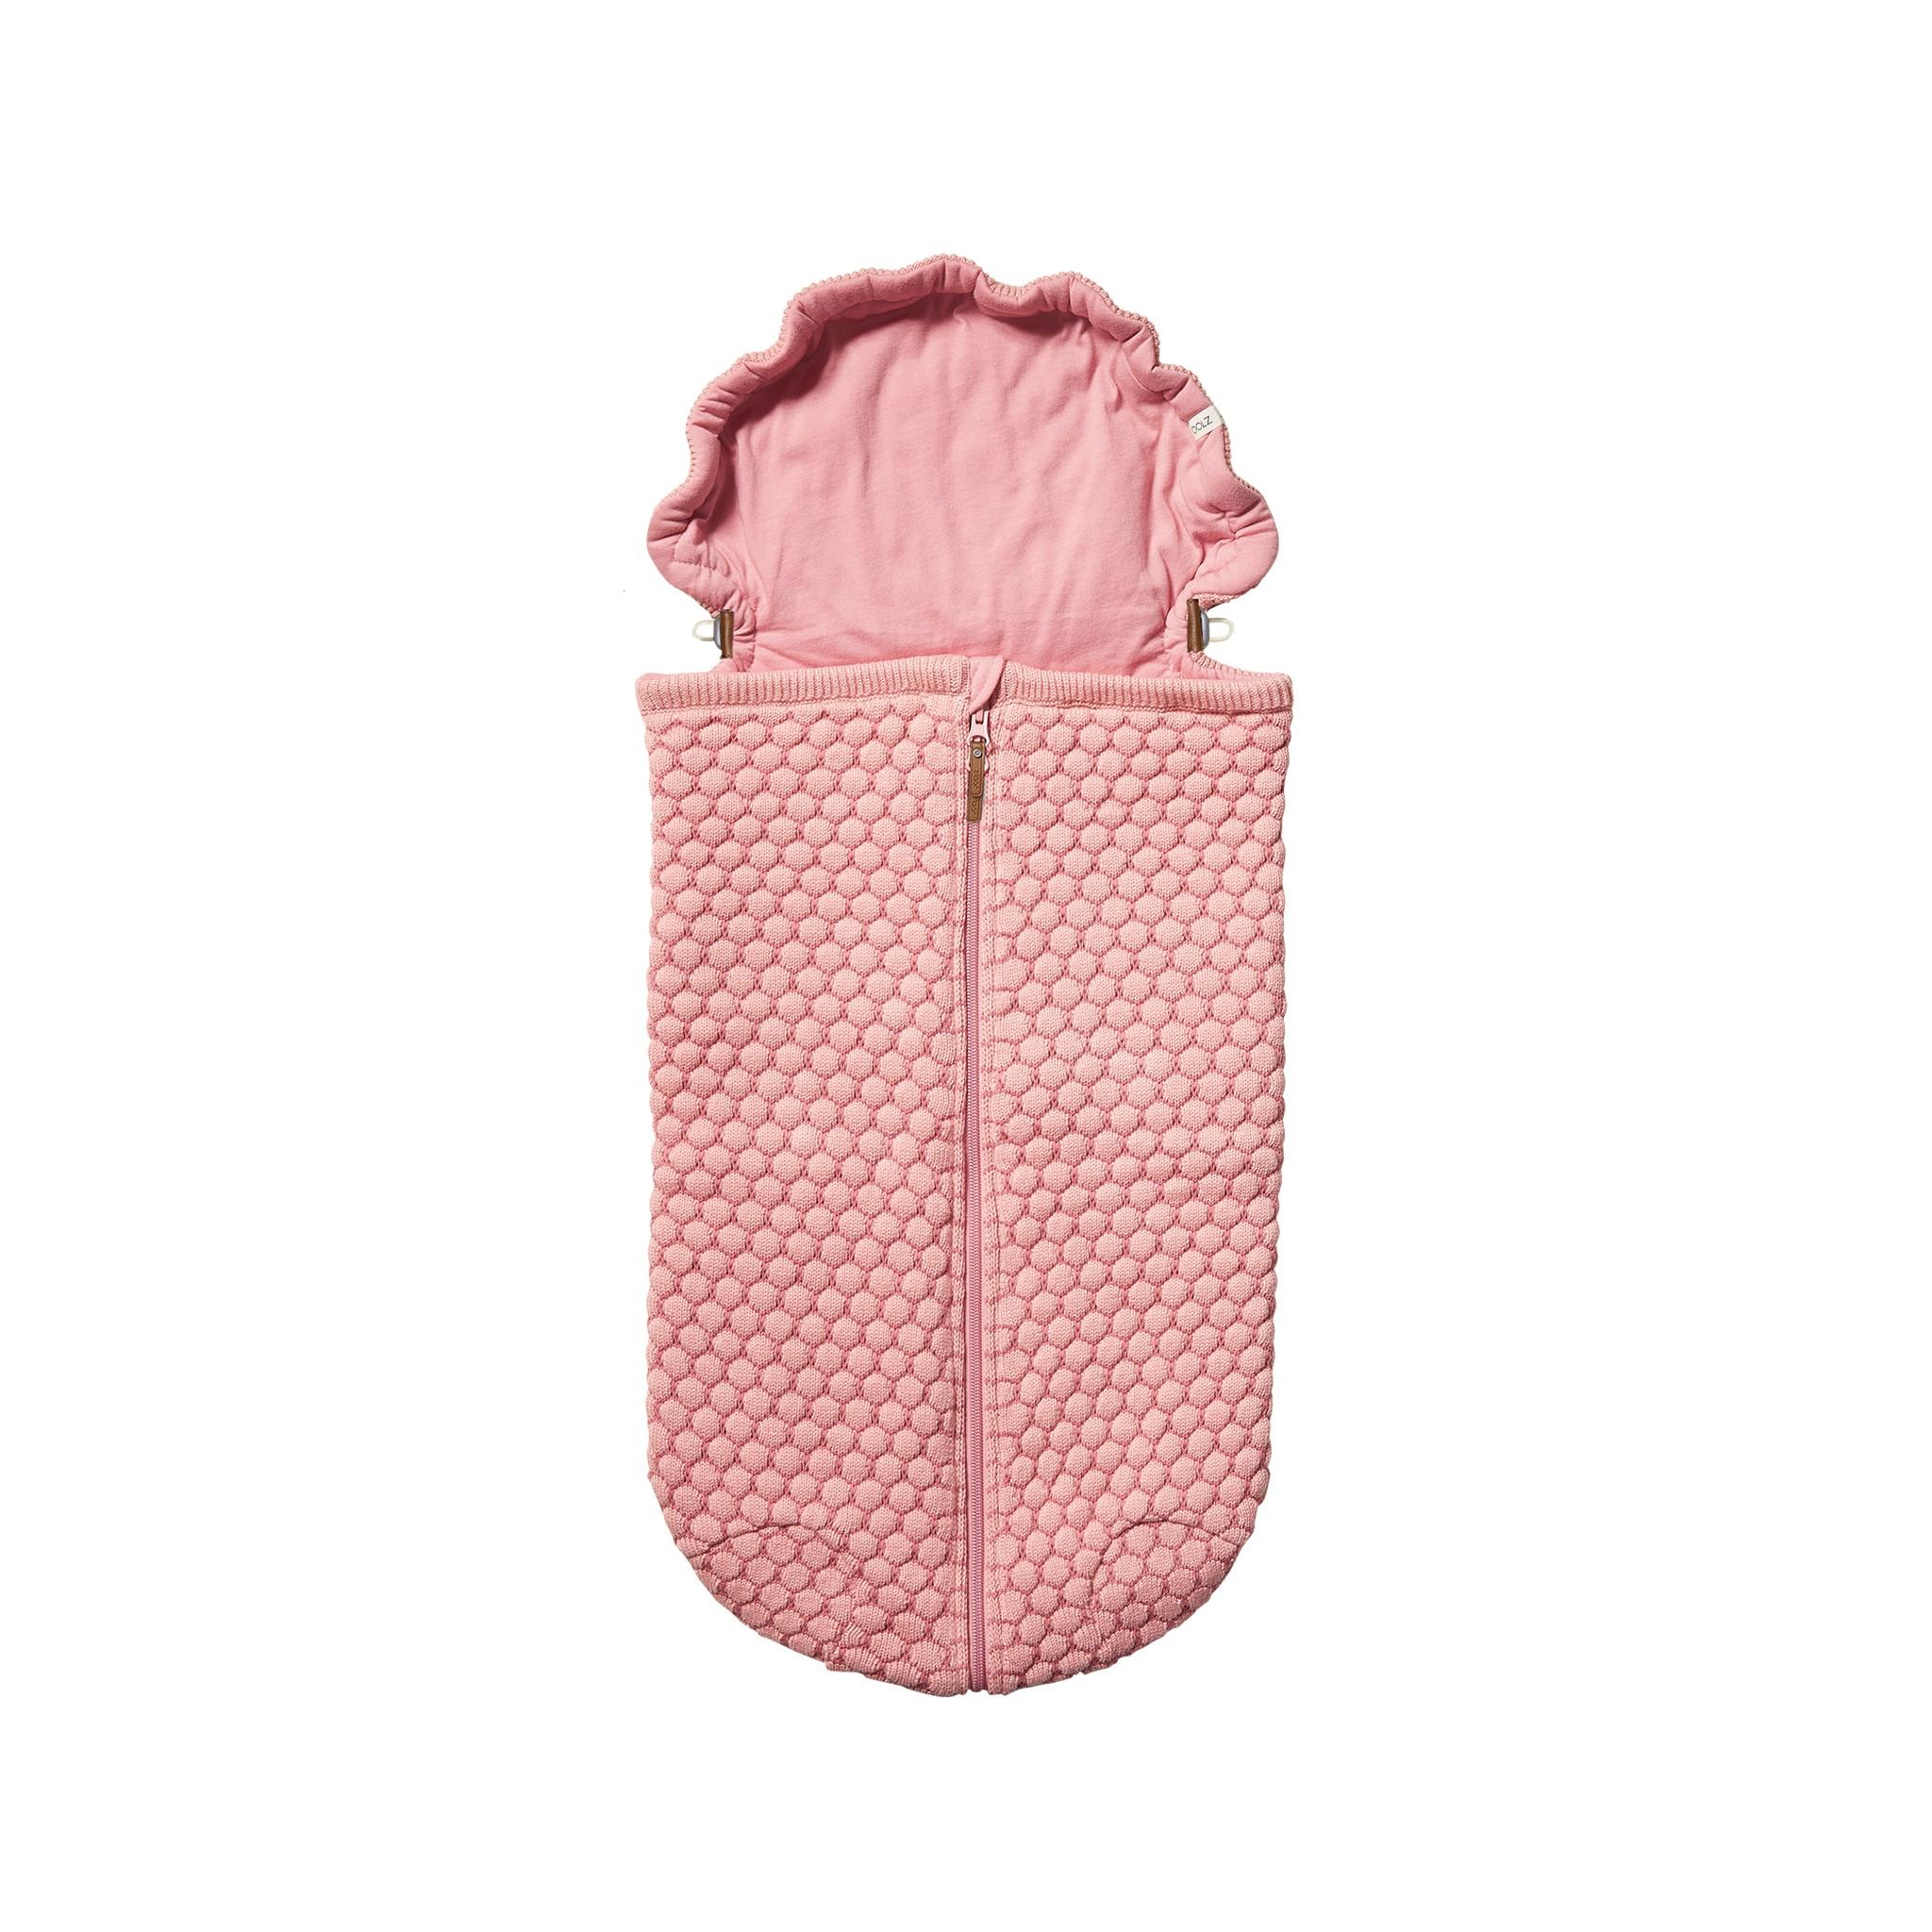 Joolz - Essentials nest honeycomb pink